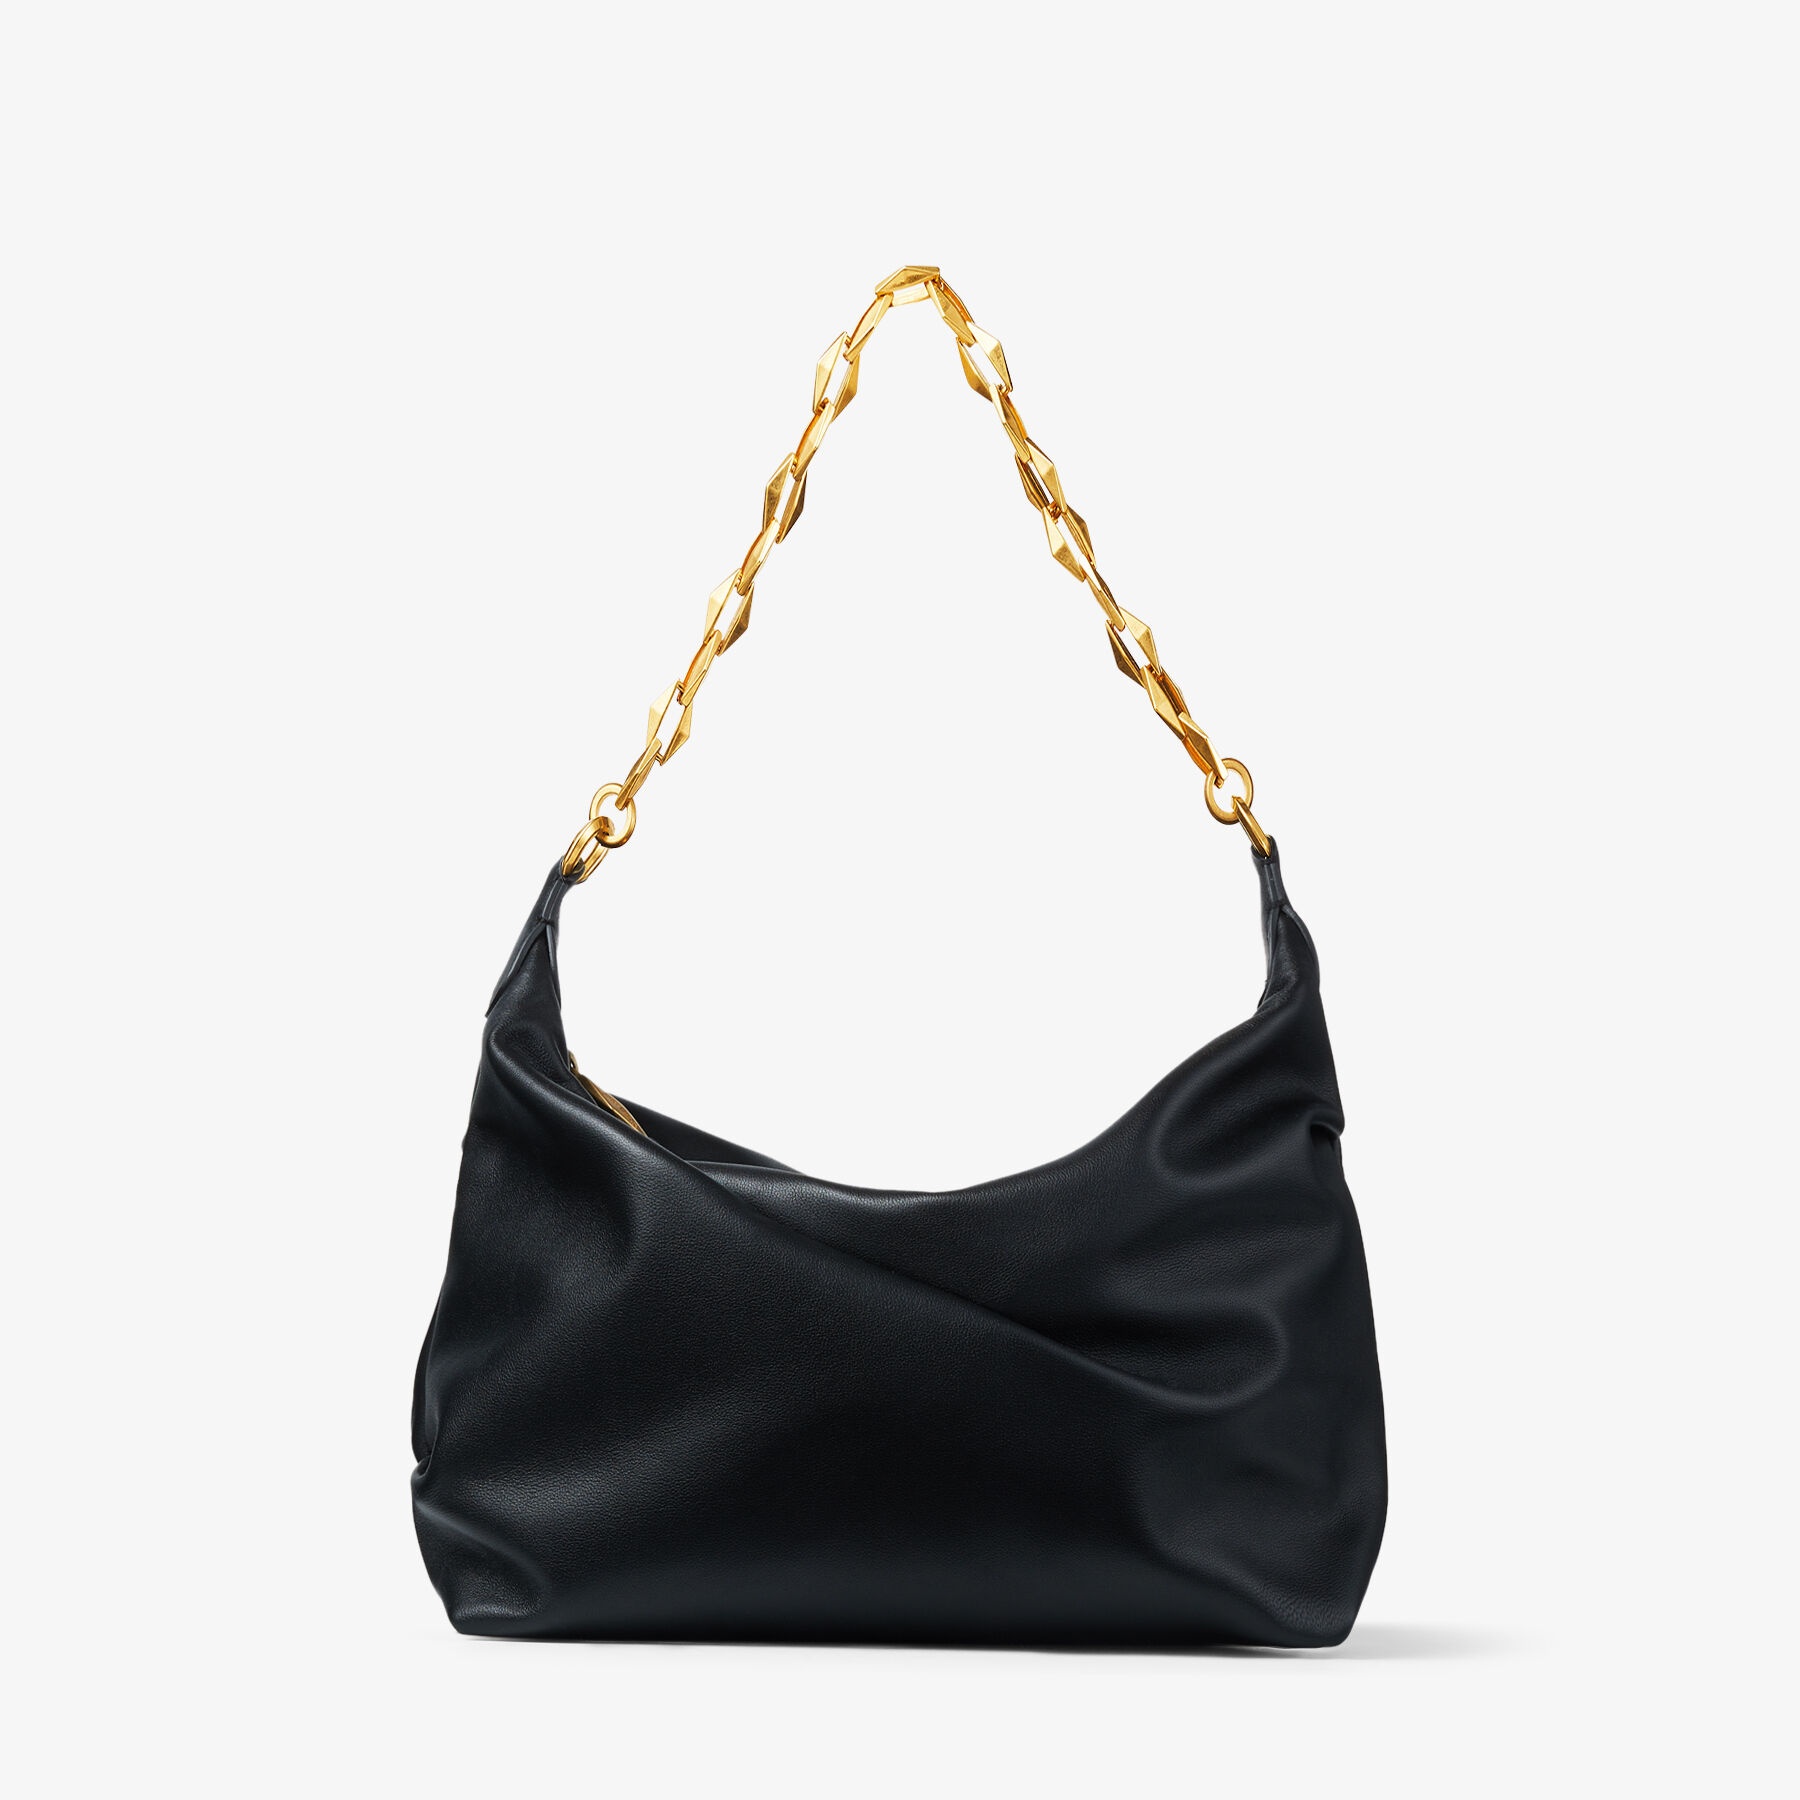 Diamond Soft Hobo S
Black Soft Calf Leather Hobo Bag with Chain Strap - 1